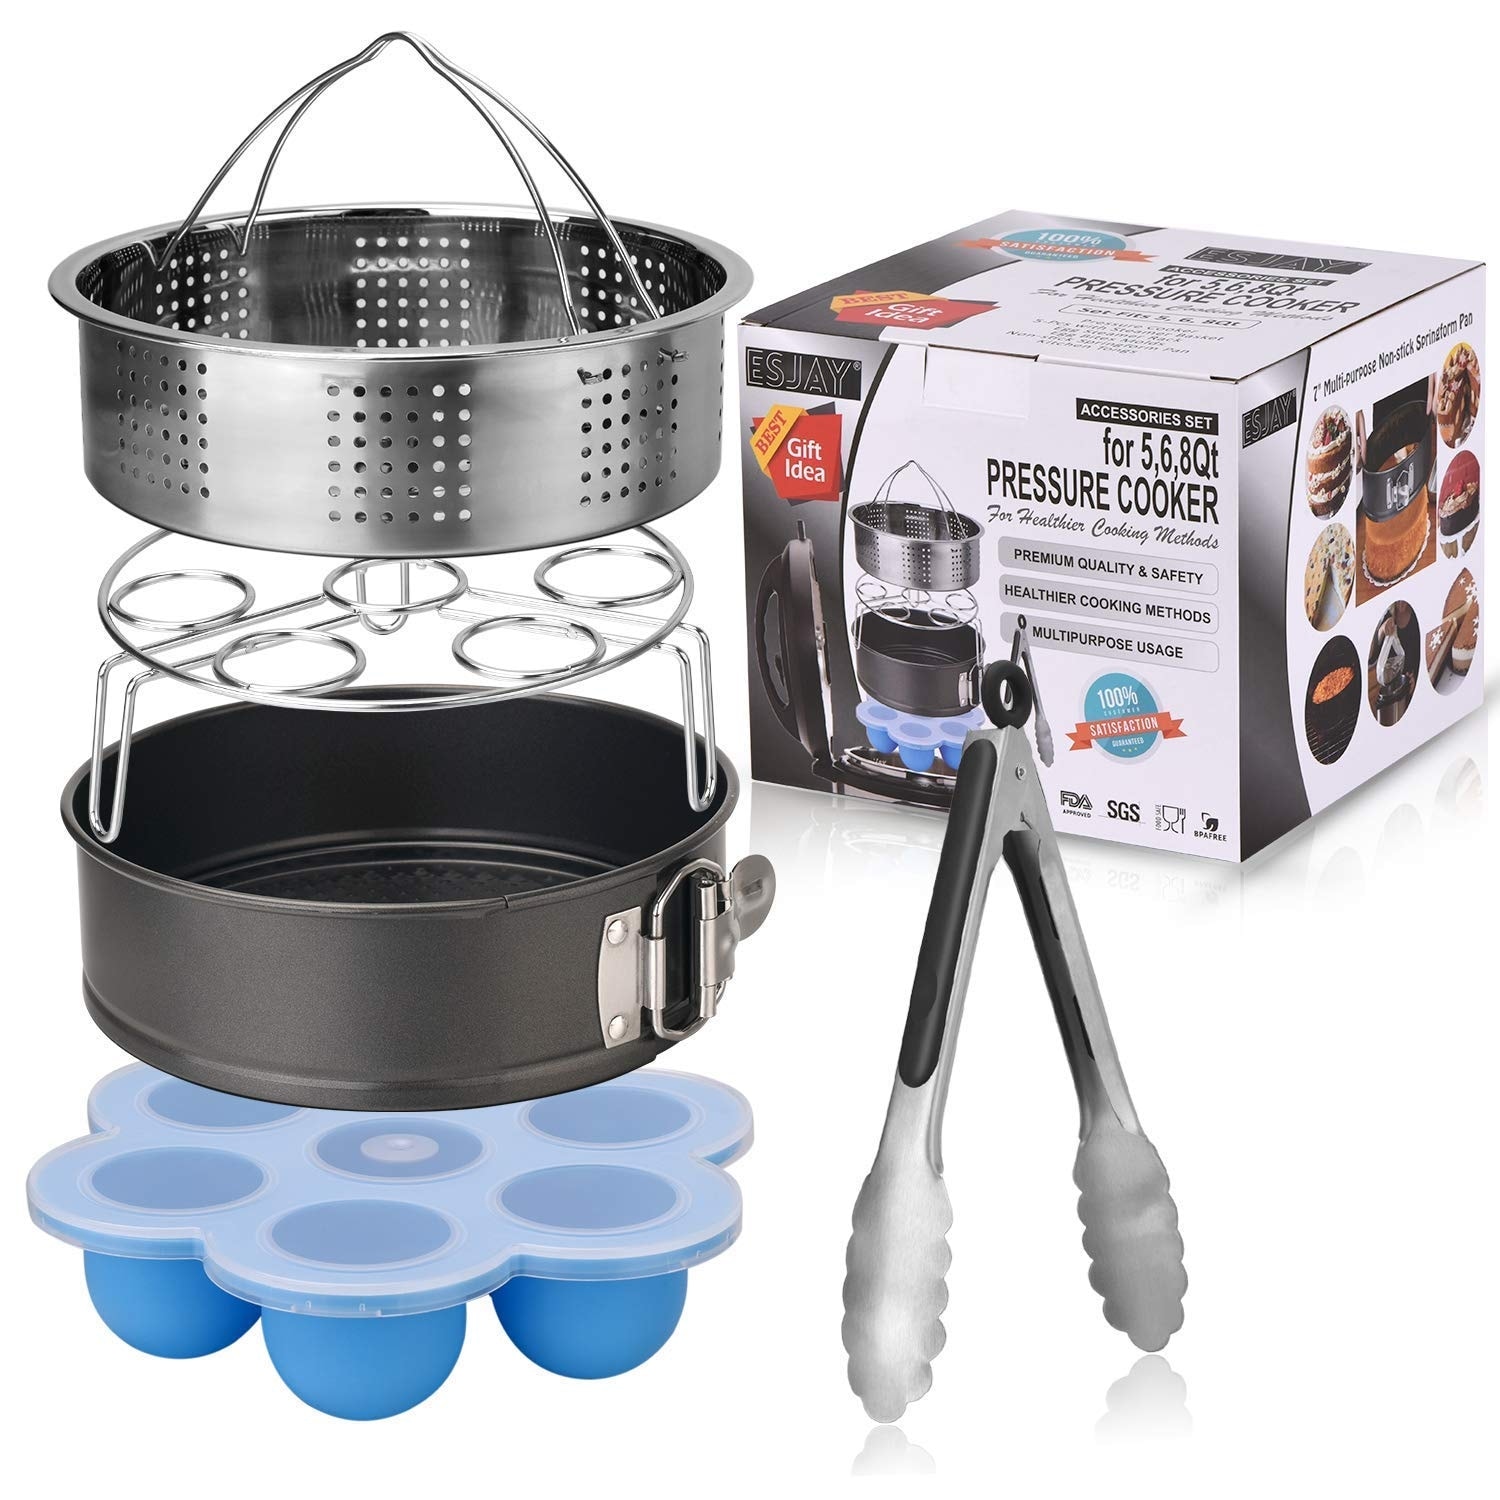 FITNATE 8 Pack Cooking Instant Pot Accessories Set Steamer Basket